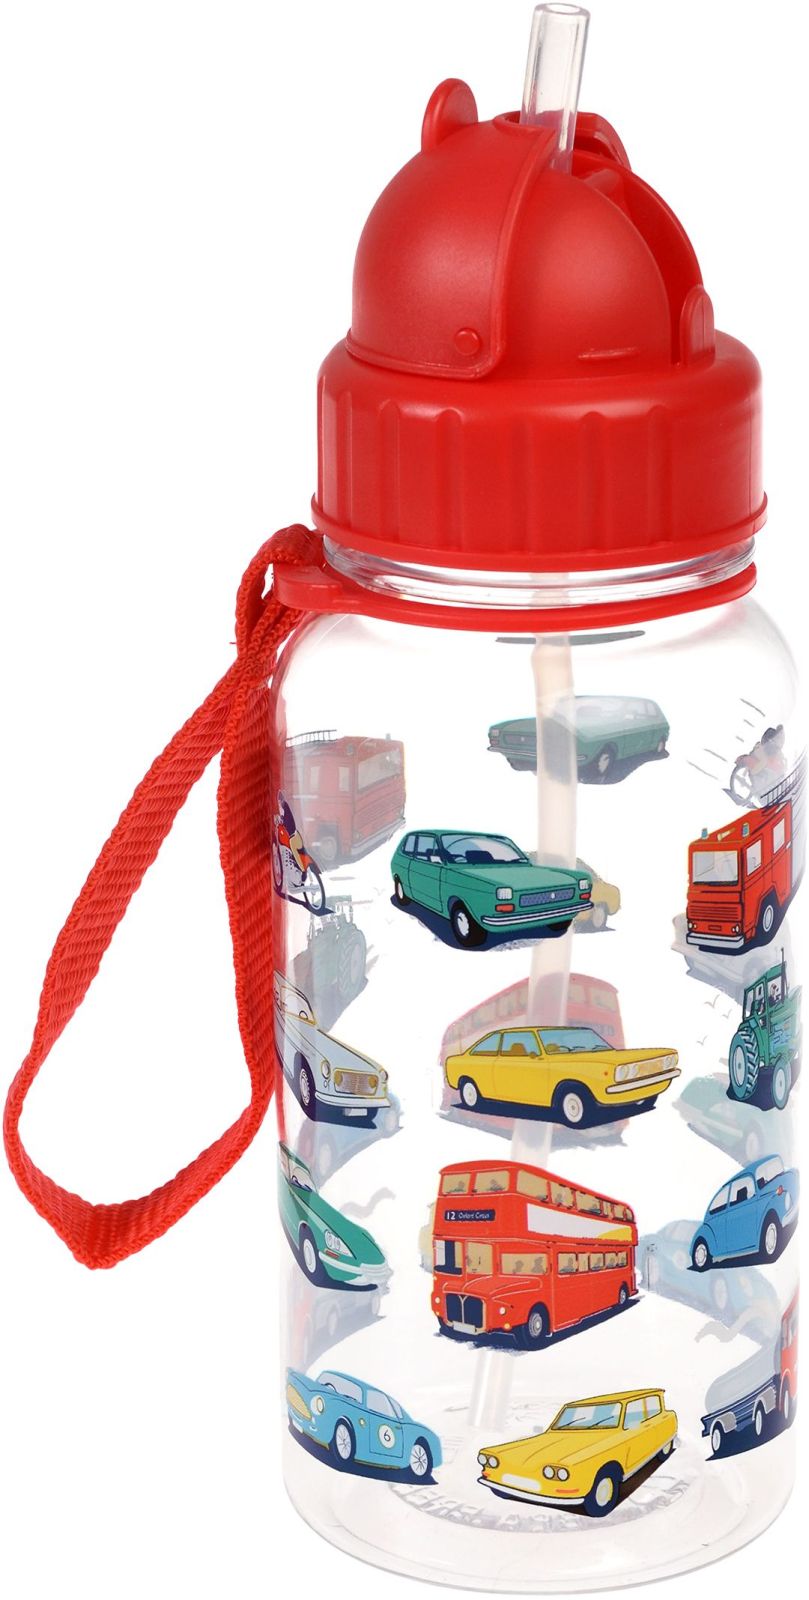 Rex London Children's water bottle with straw 500 ml - Road Trip